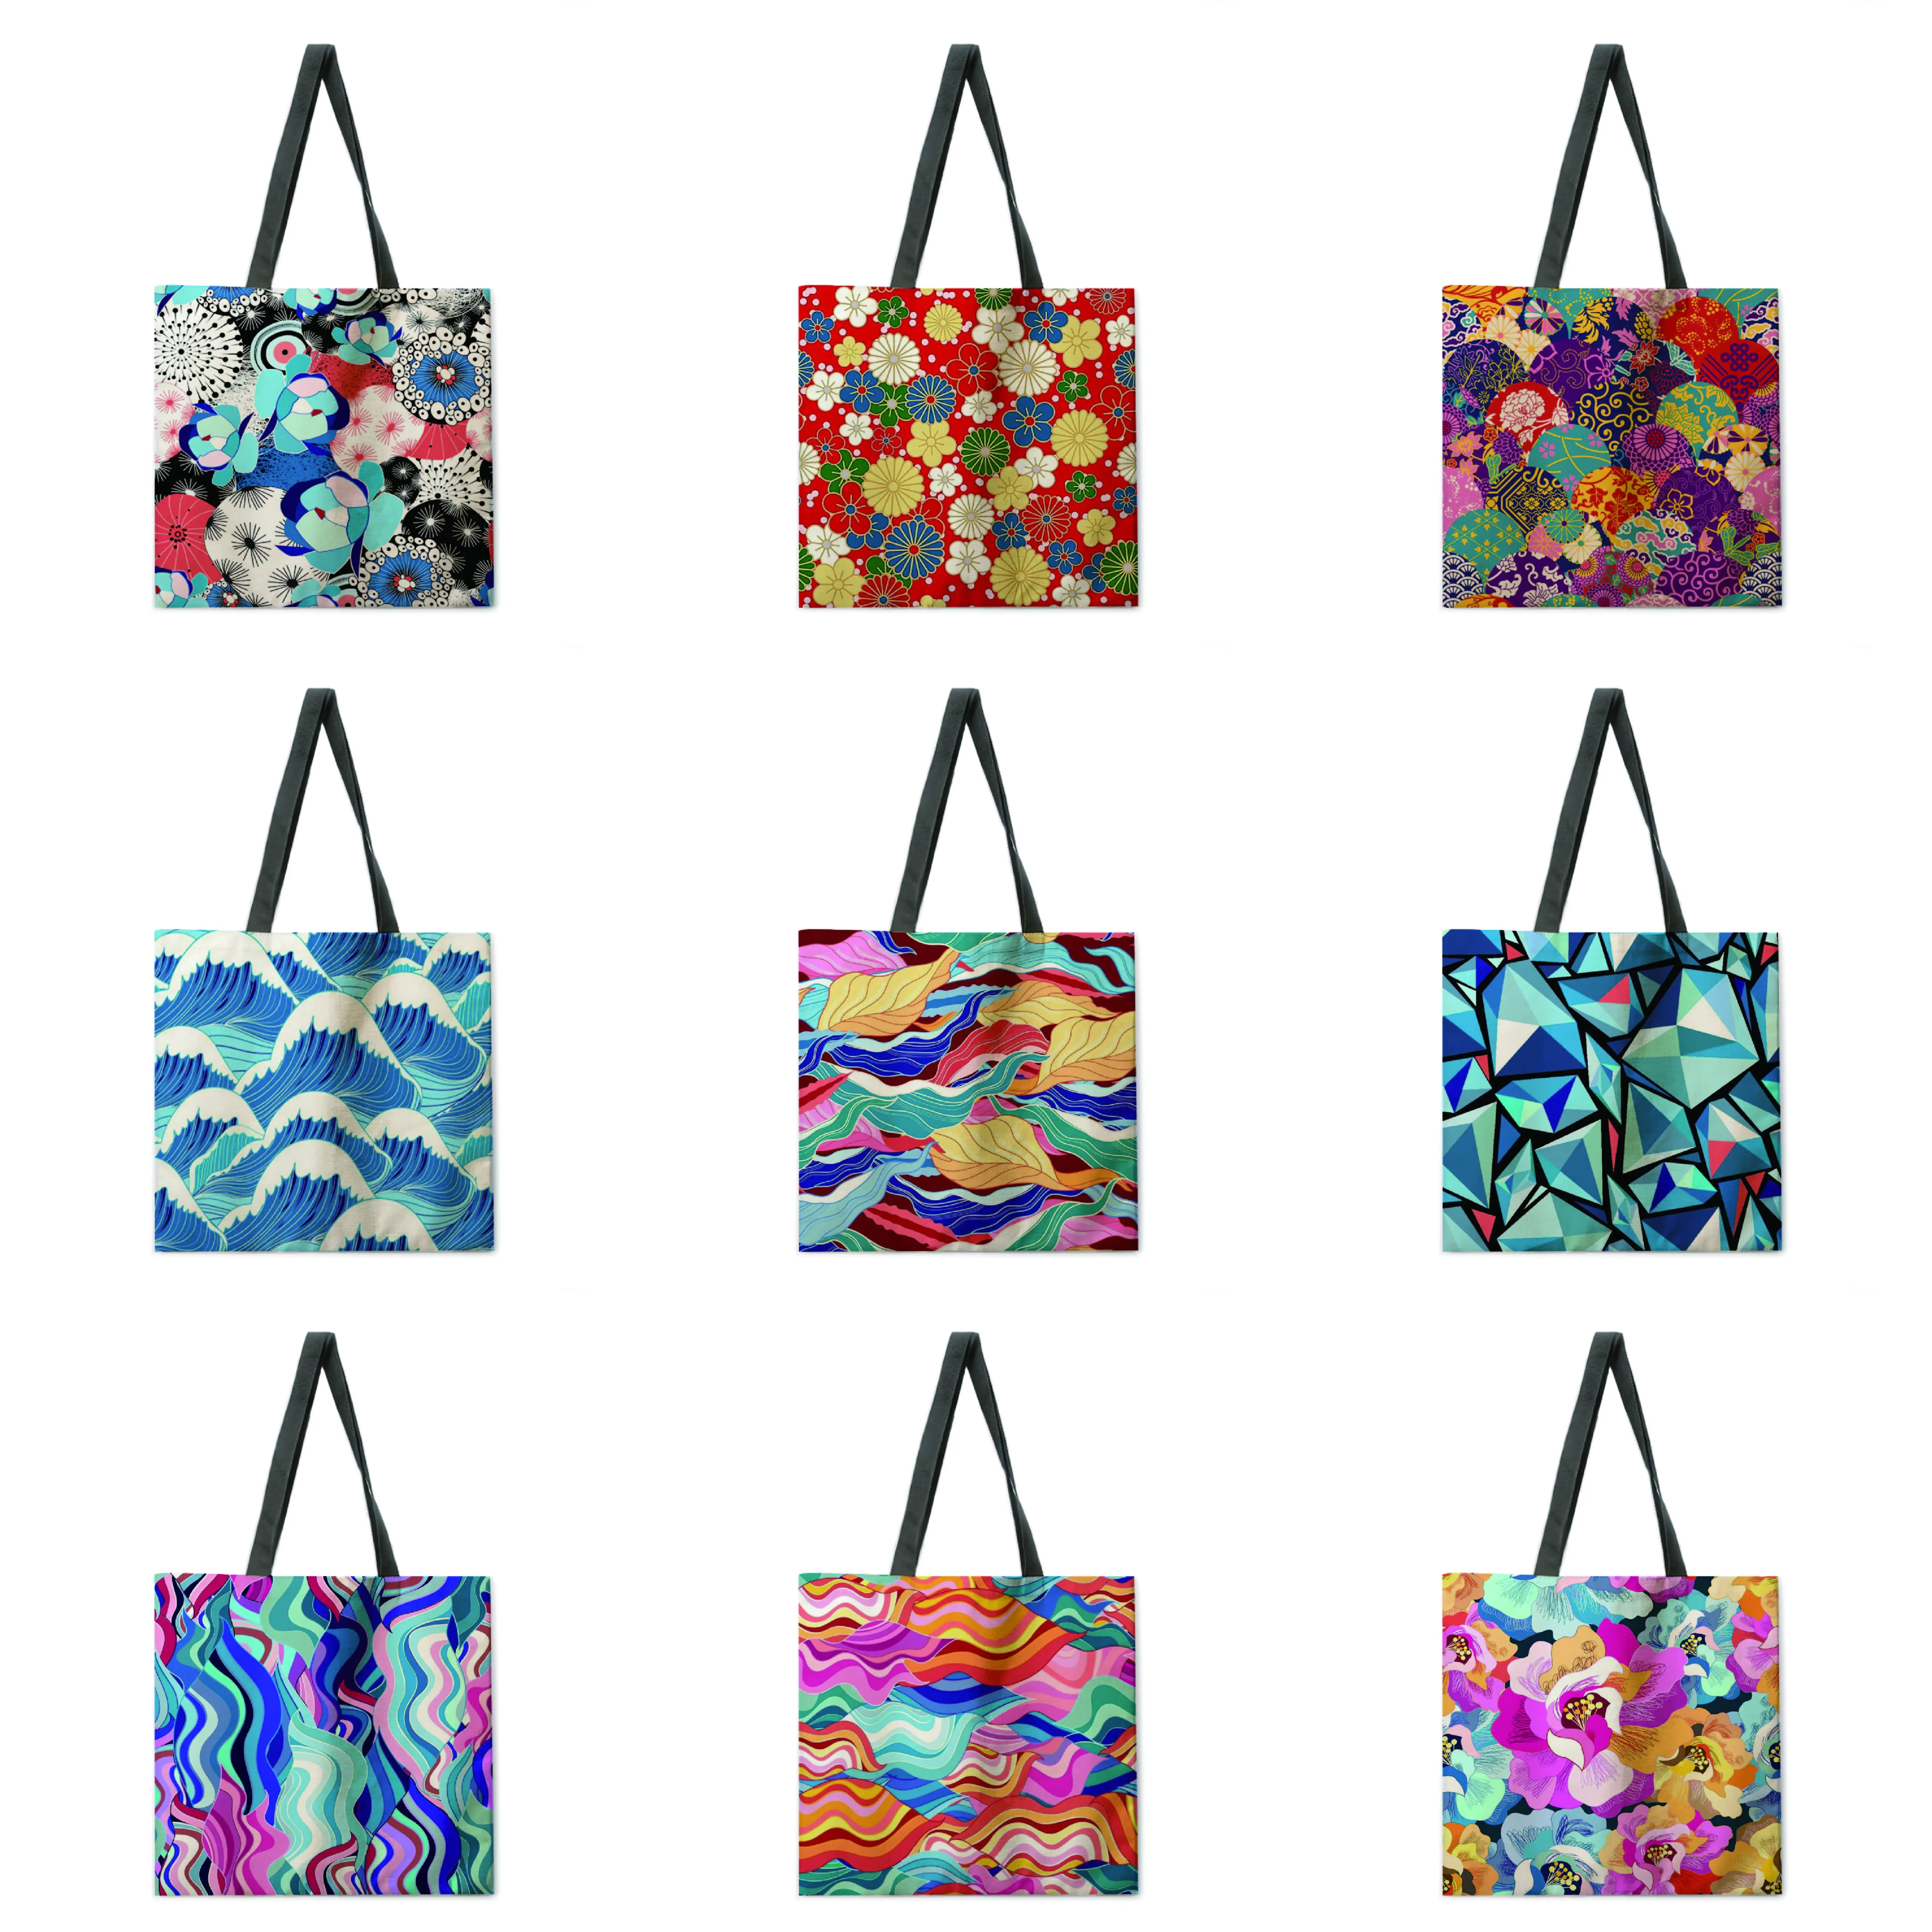 Japanese decorative painting printing tote bag linen fabric bag casual folding shopping bag outdoor beach bag everyday handbag